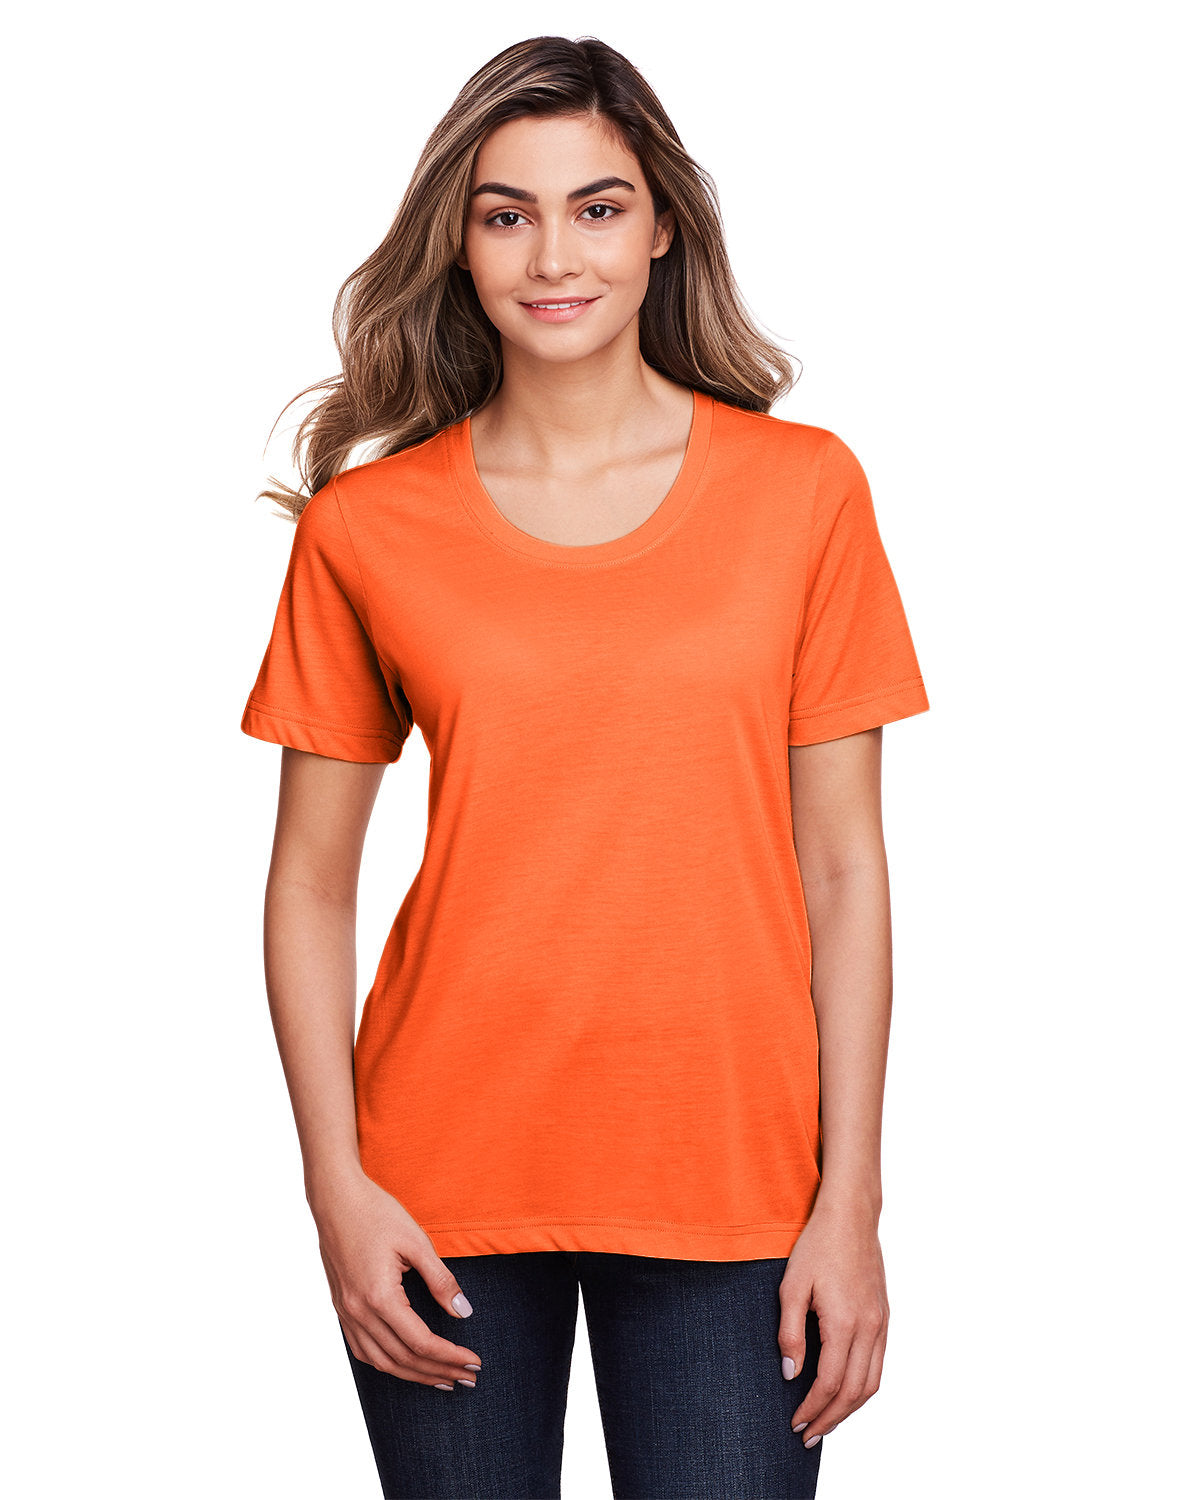 Ladies T-Shirt - SoftTouch - Bely Premium Cotton